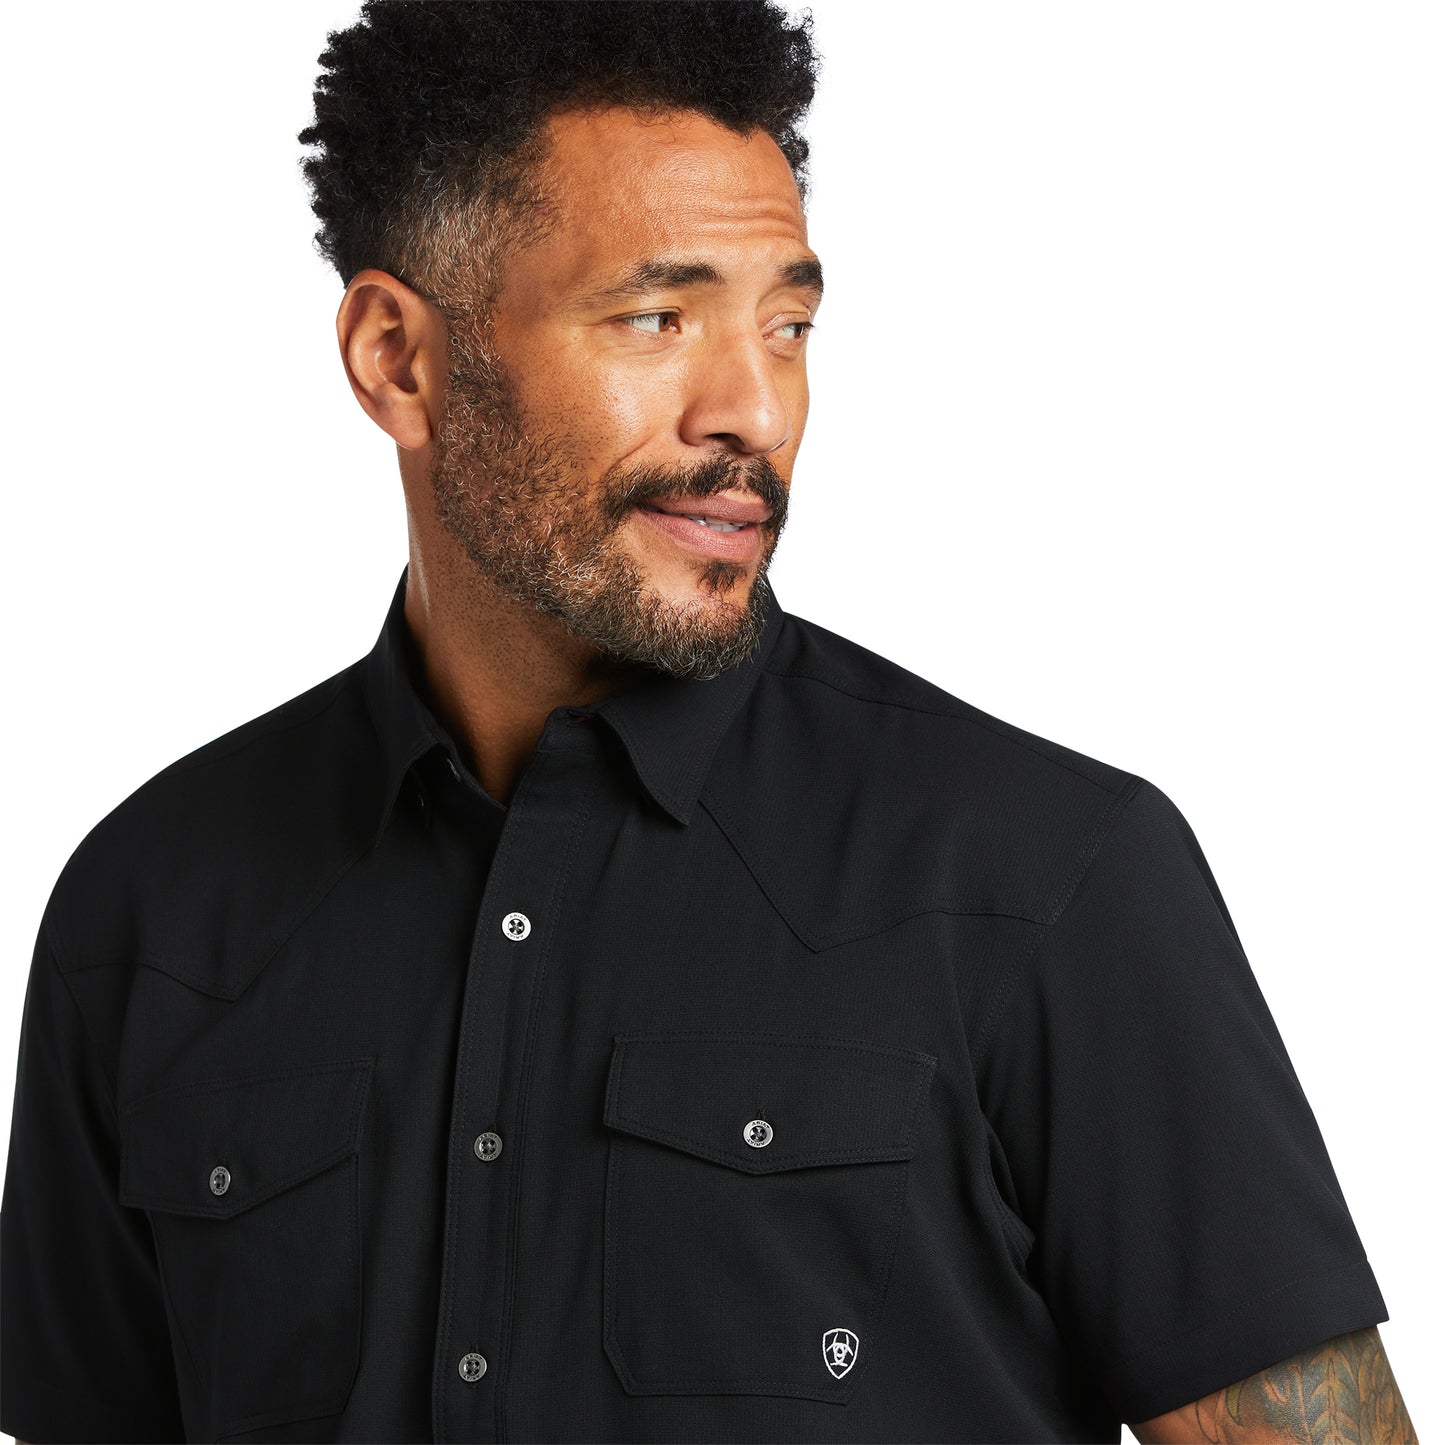 Ariat® Men's VenTEK™ Western Black Button Down Shirt 10039572